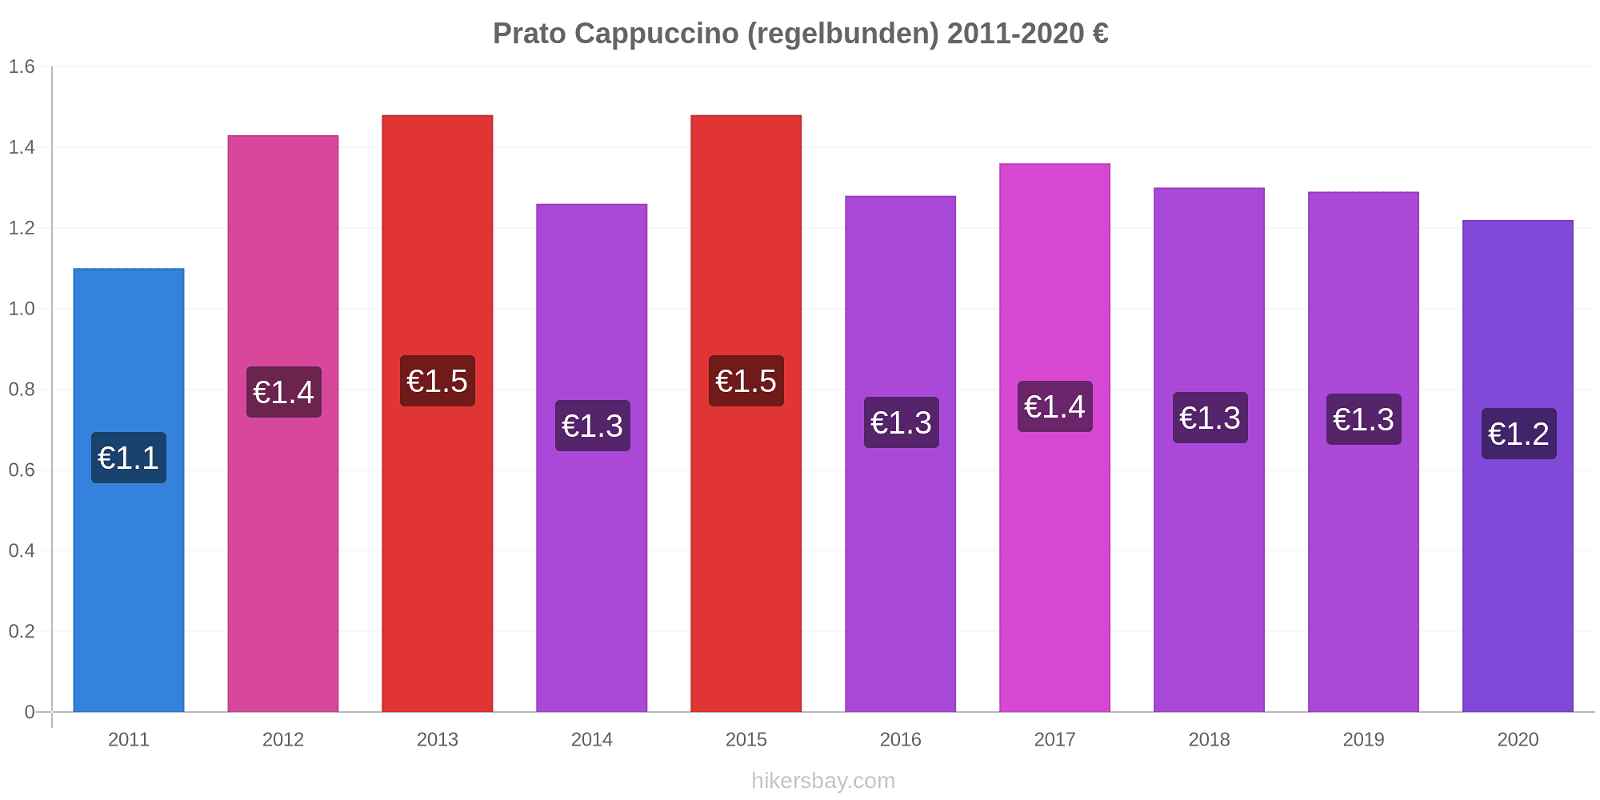 Prato prisförändringar Cappuccino (regelbunden) hikersbay.com